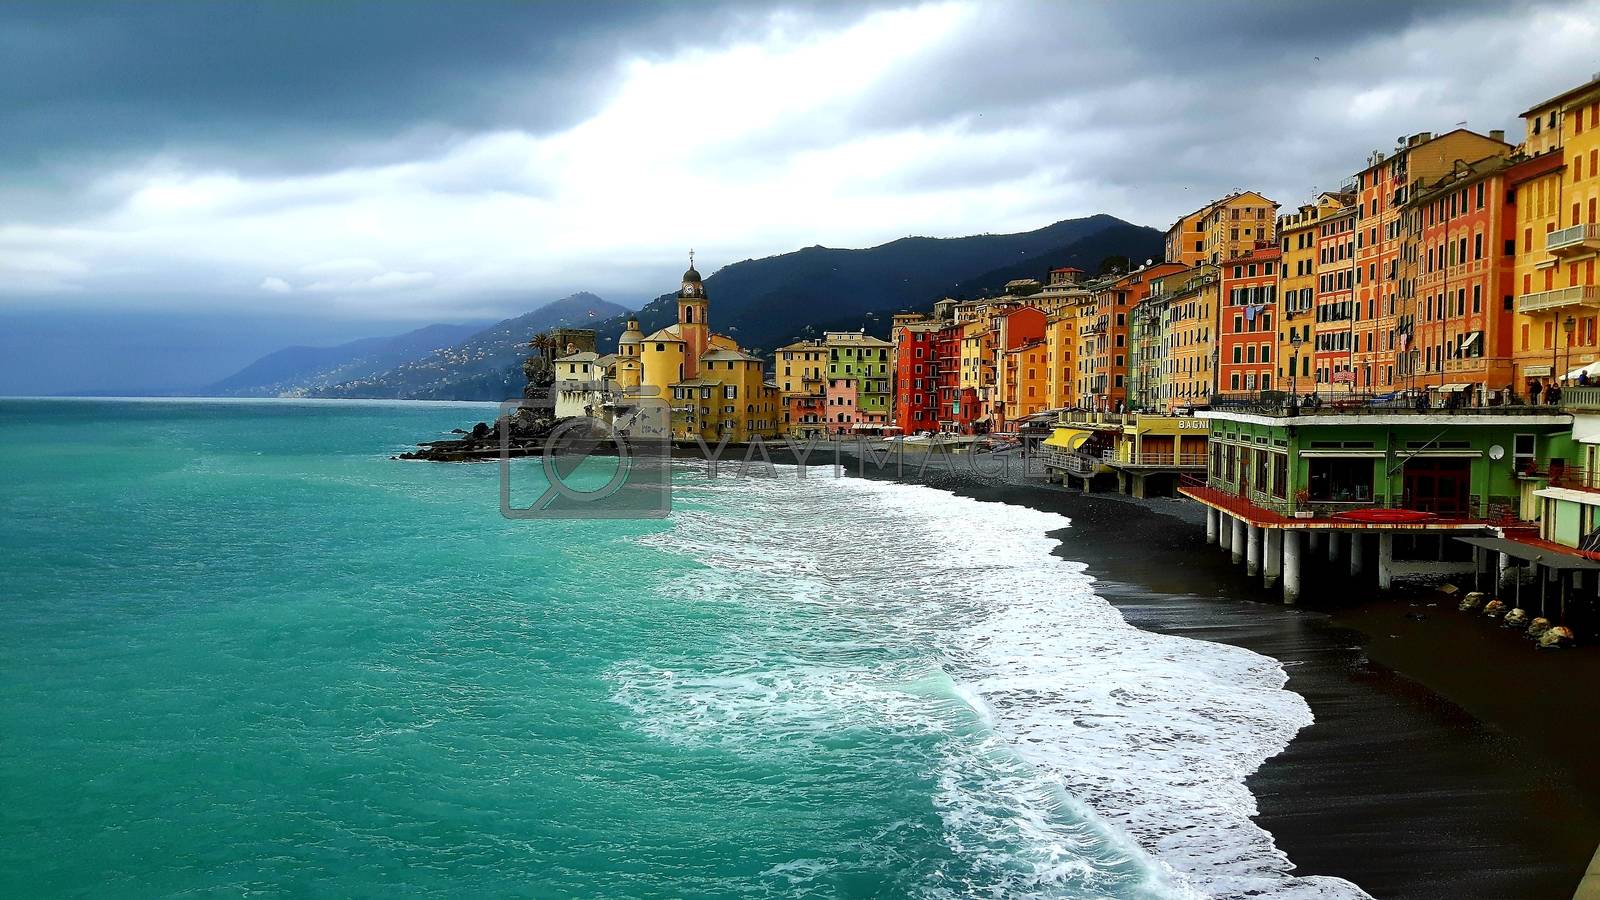 Royalty free image of Ligurian riviera from Camogli to Portofino by yohananegusse